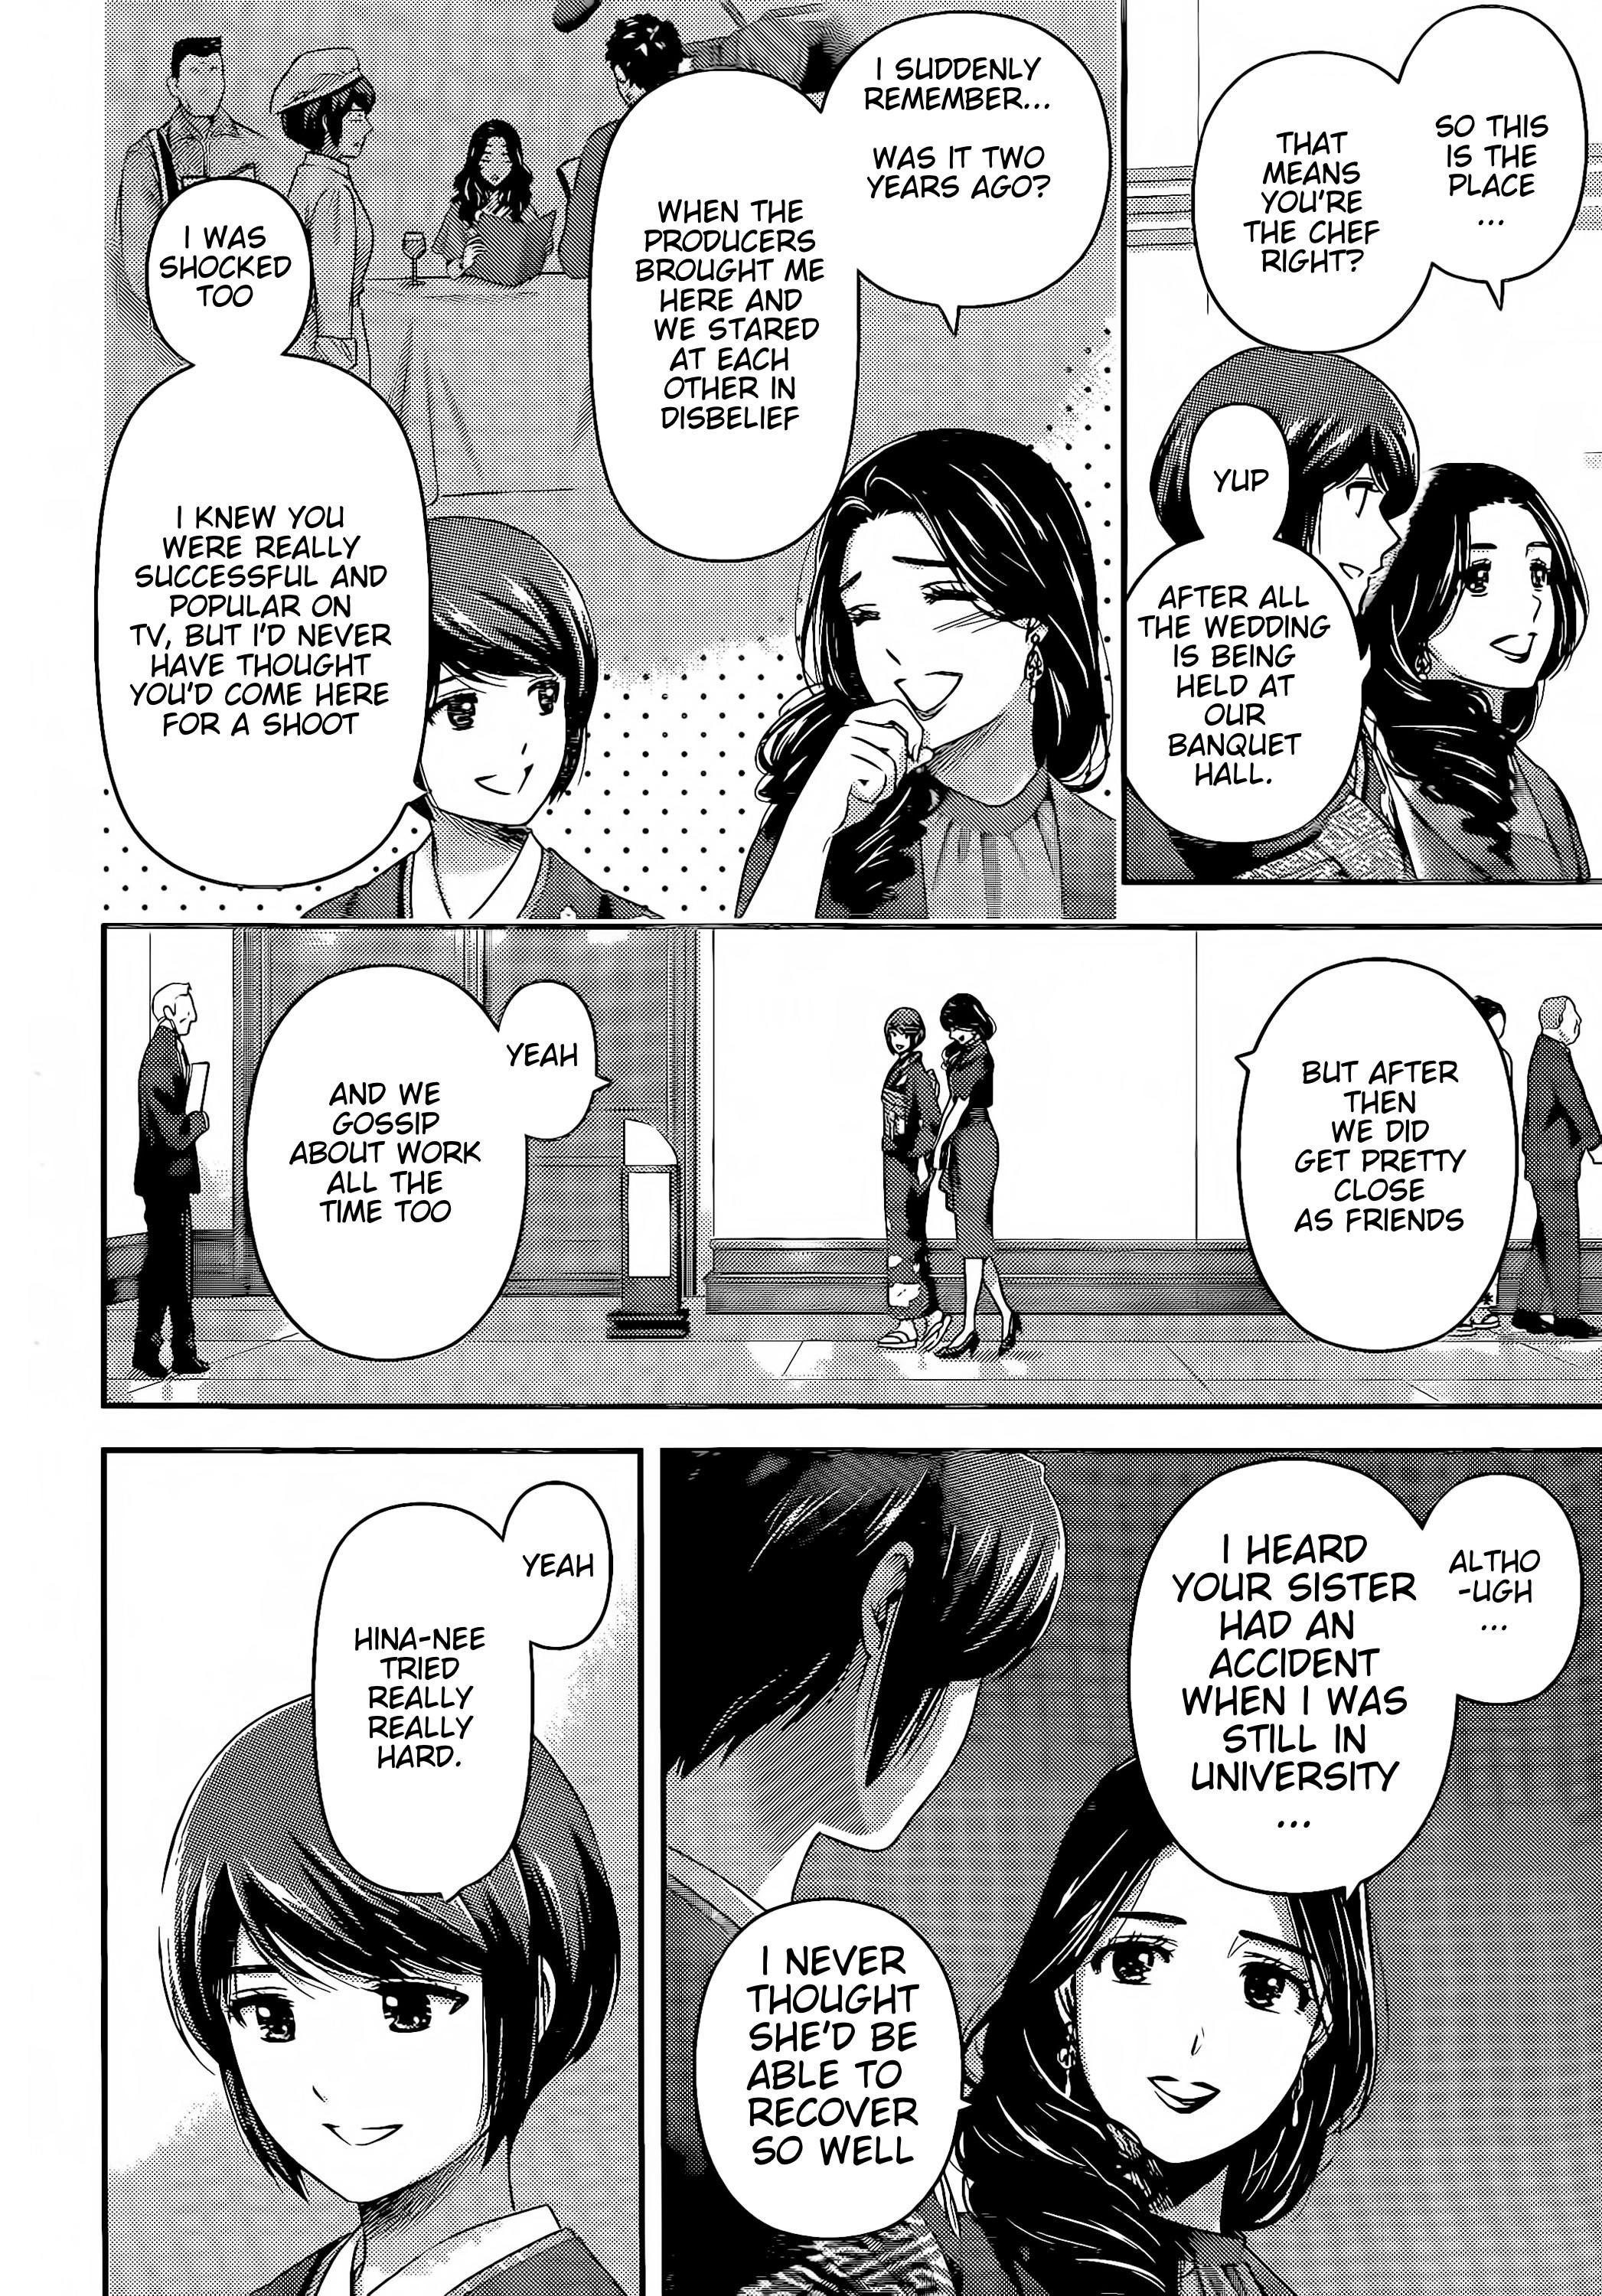 Domestic Girlfriend, Chapter 228 - Domestic Girlfriend Manga Online